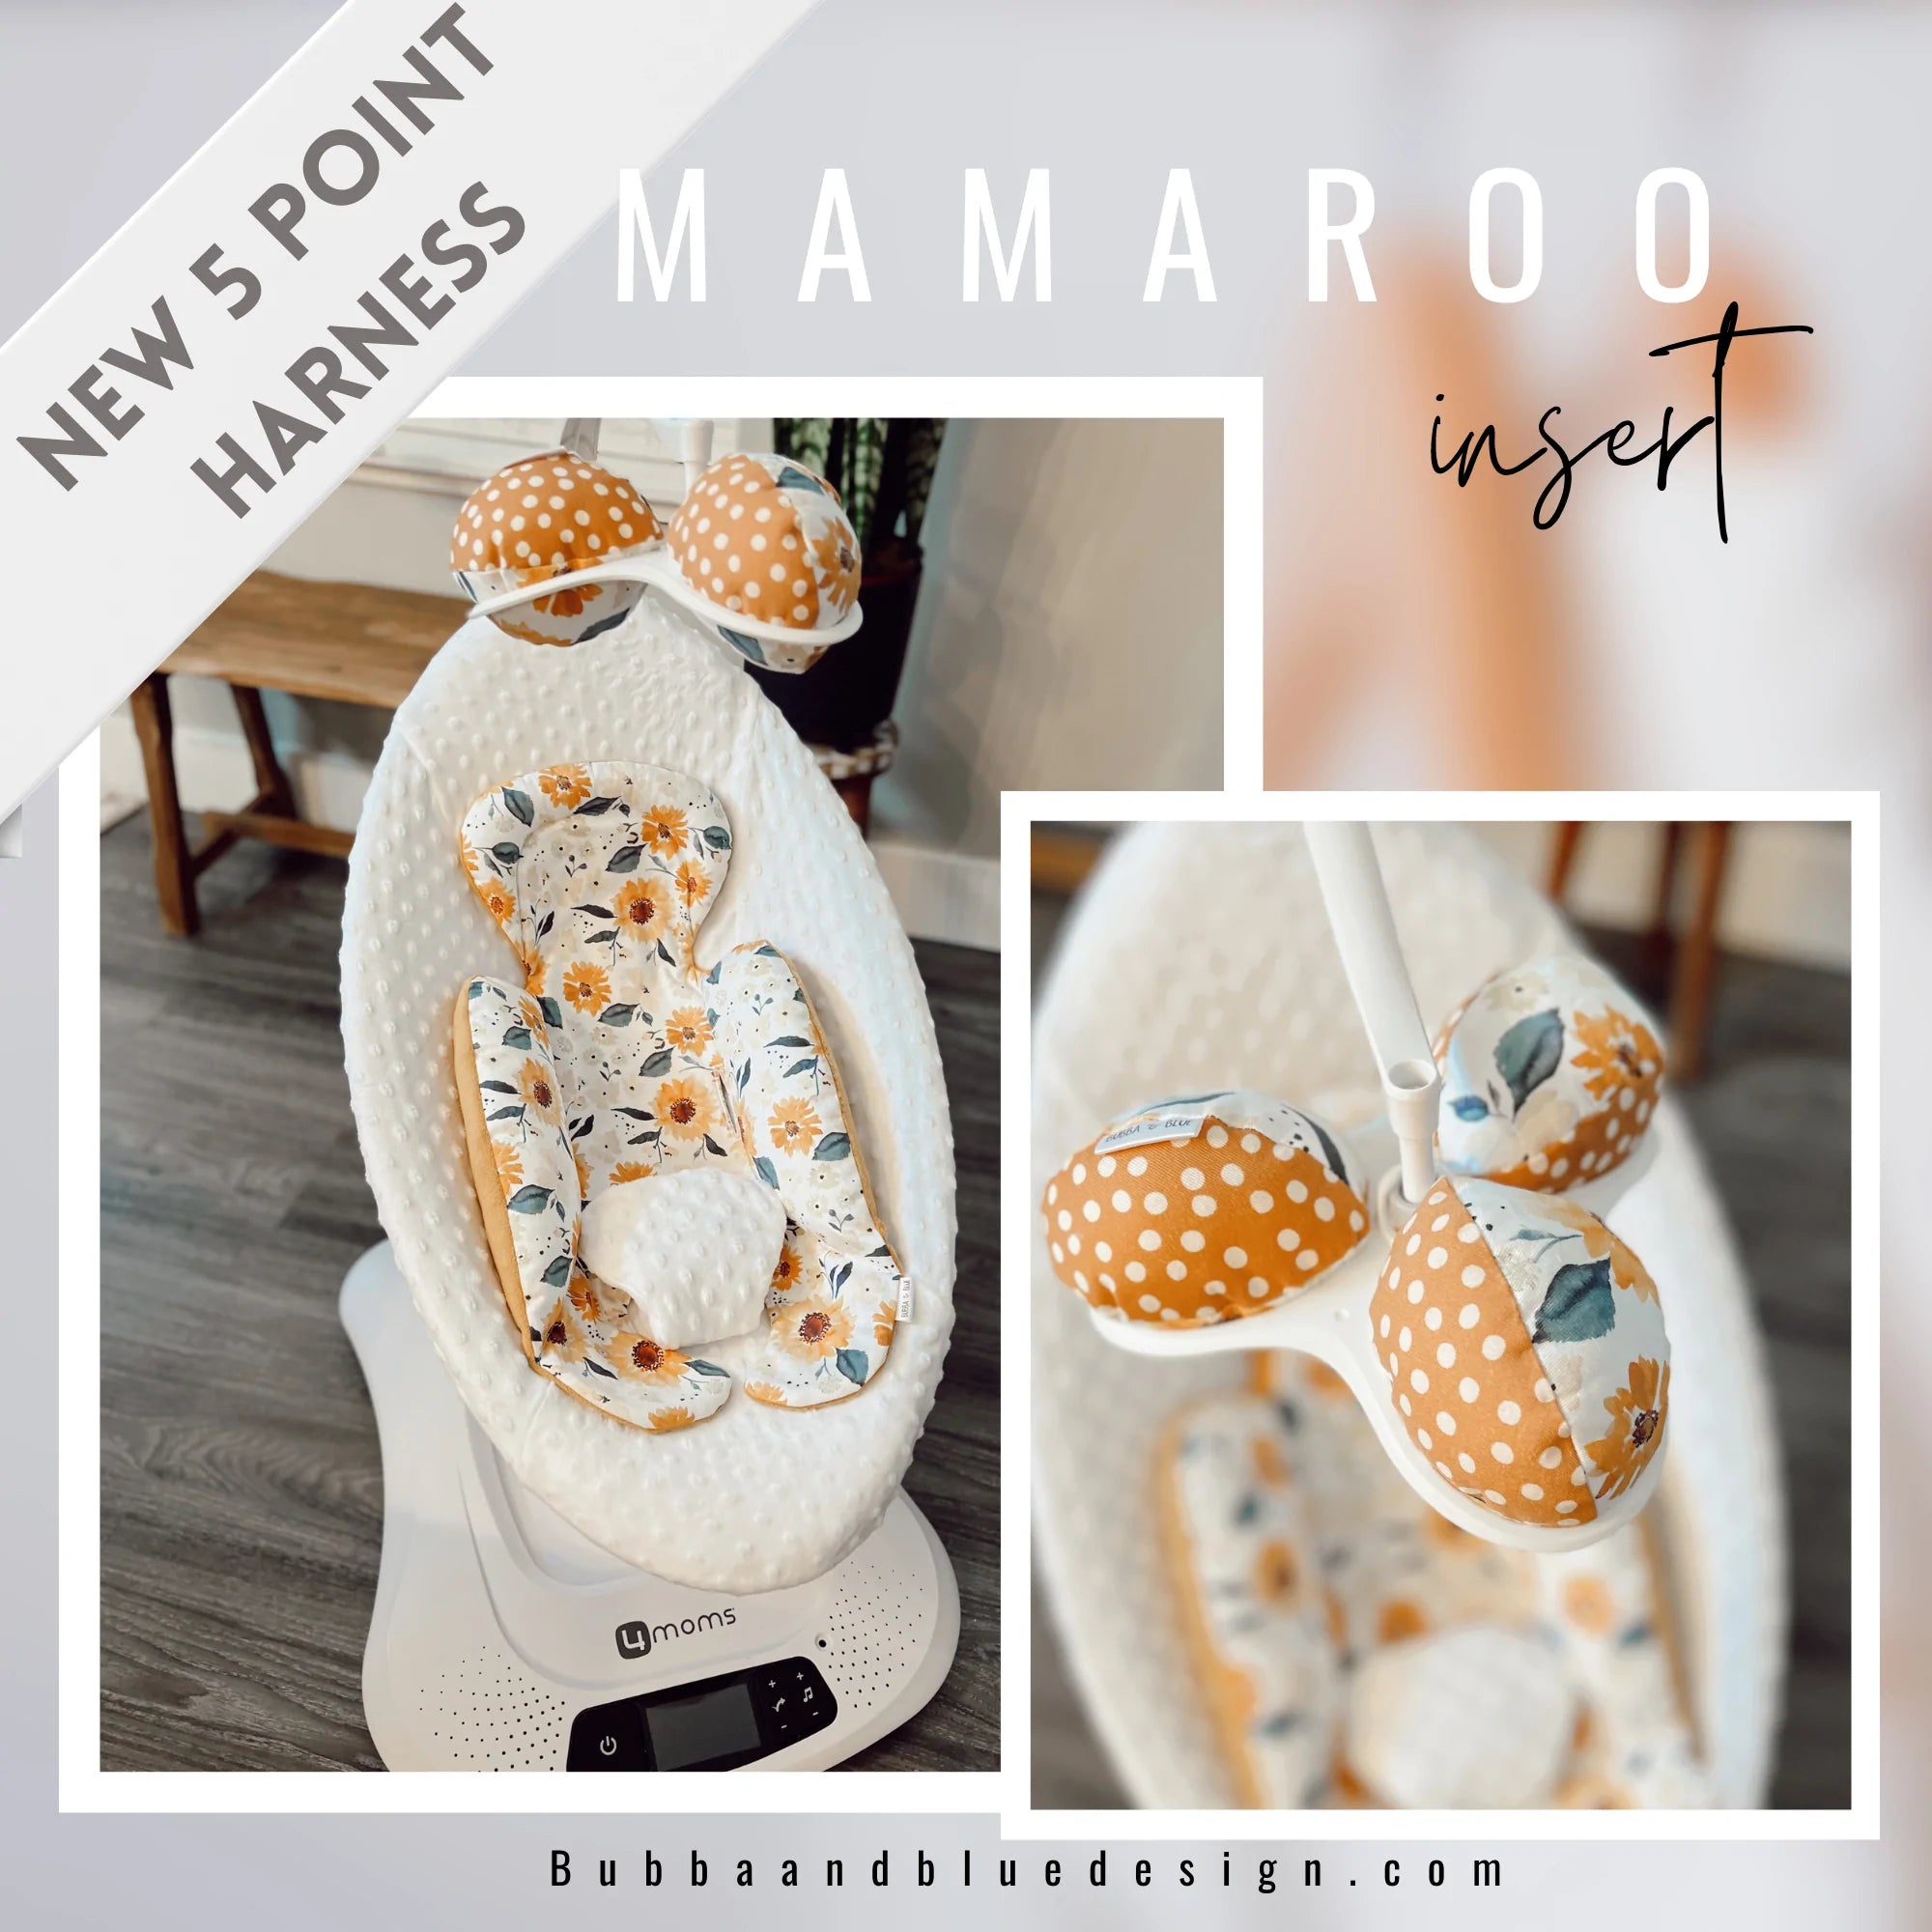 Customize  Mamaroo newborn cover, insert and Mobile Balls